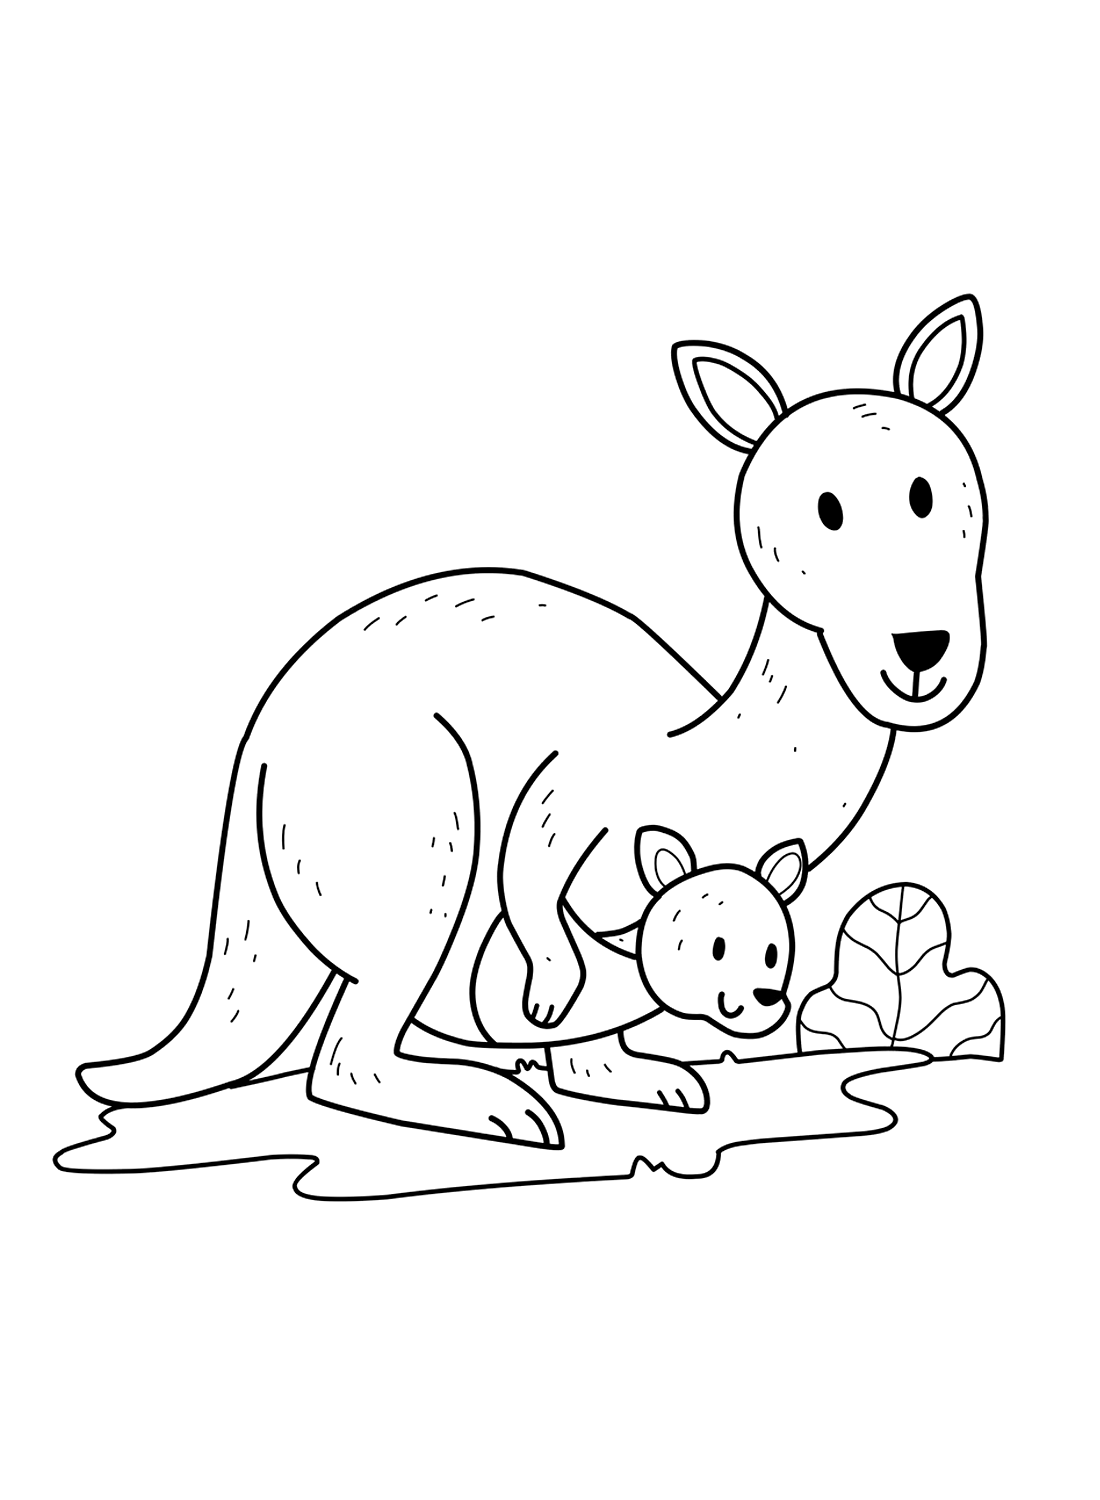 Kangaroo Playing with Joey from Kangaroo